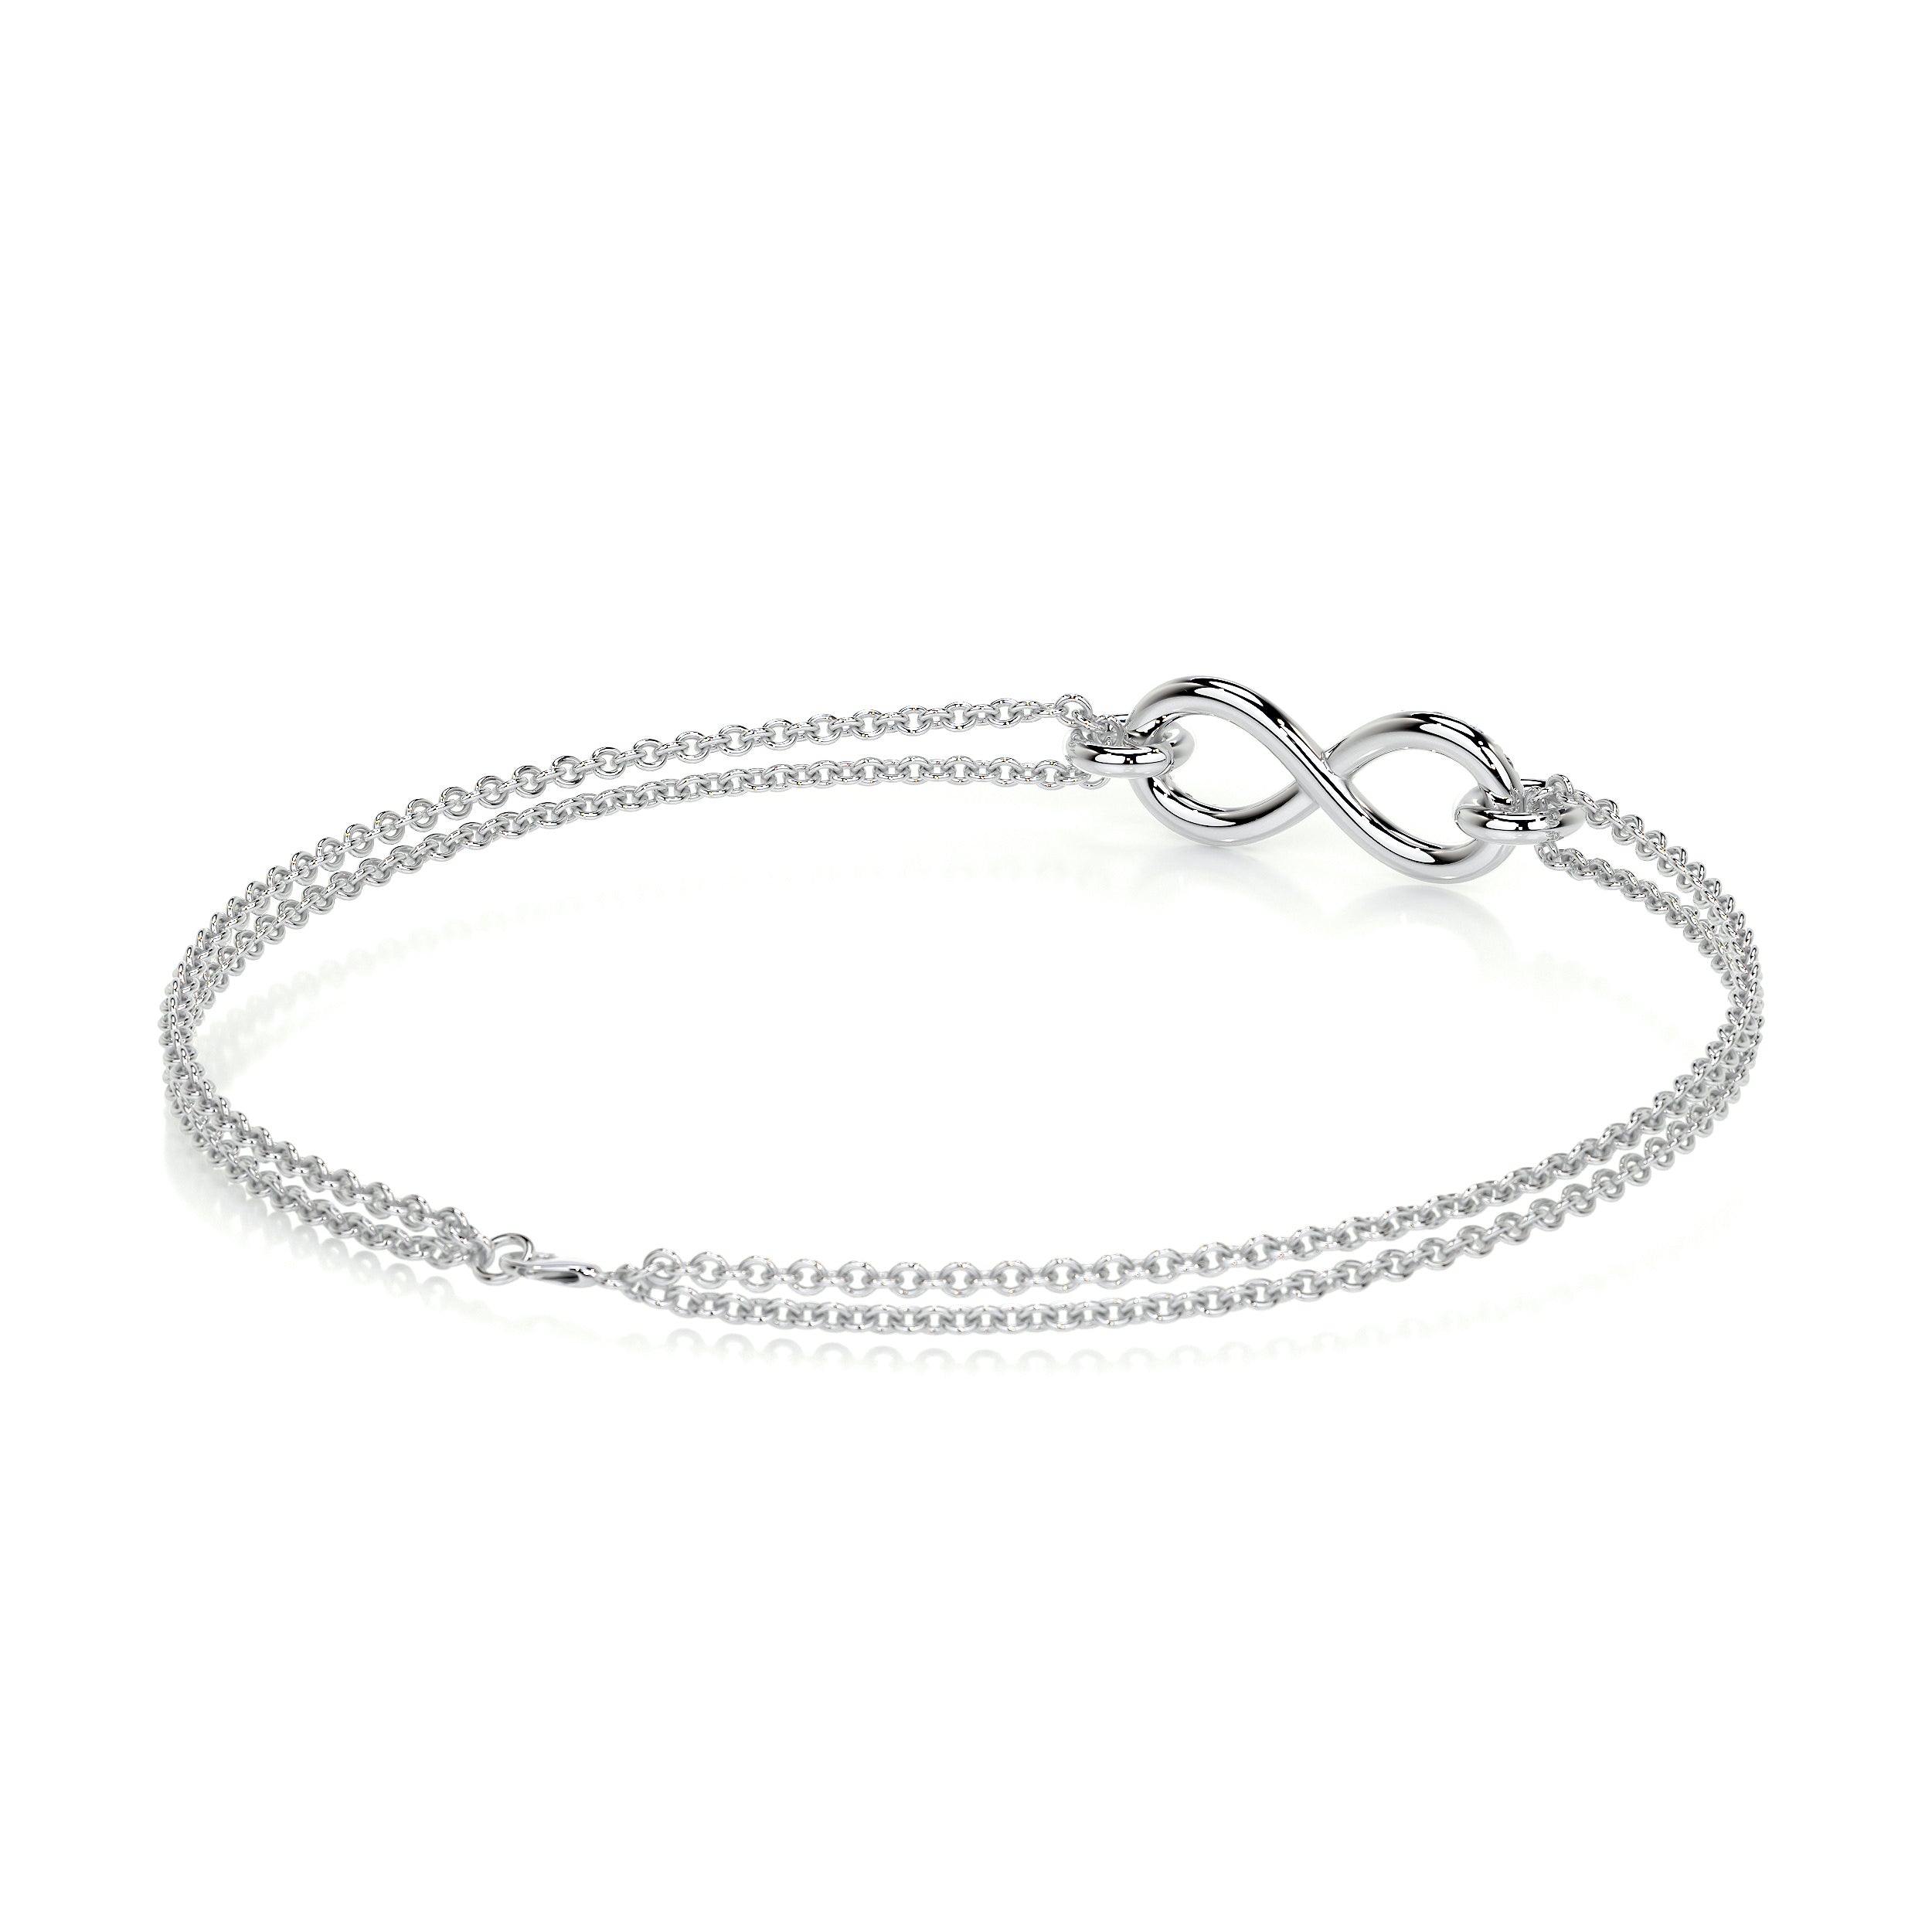 Candice Diamonds Bracelet   (0.07 Carat) -18K White Gold